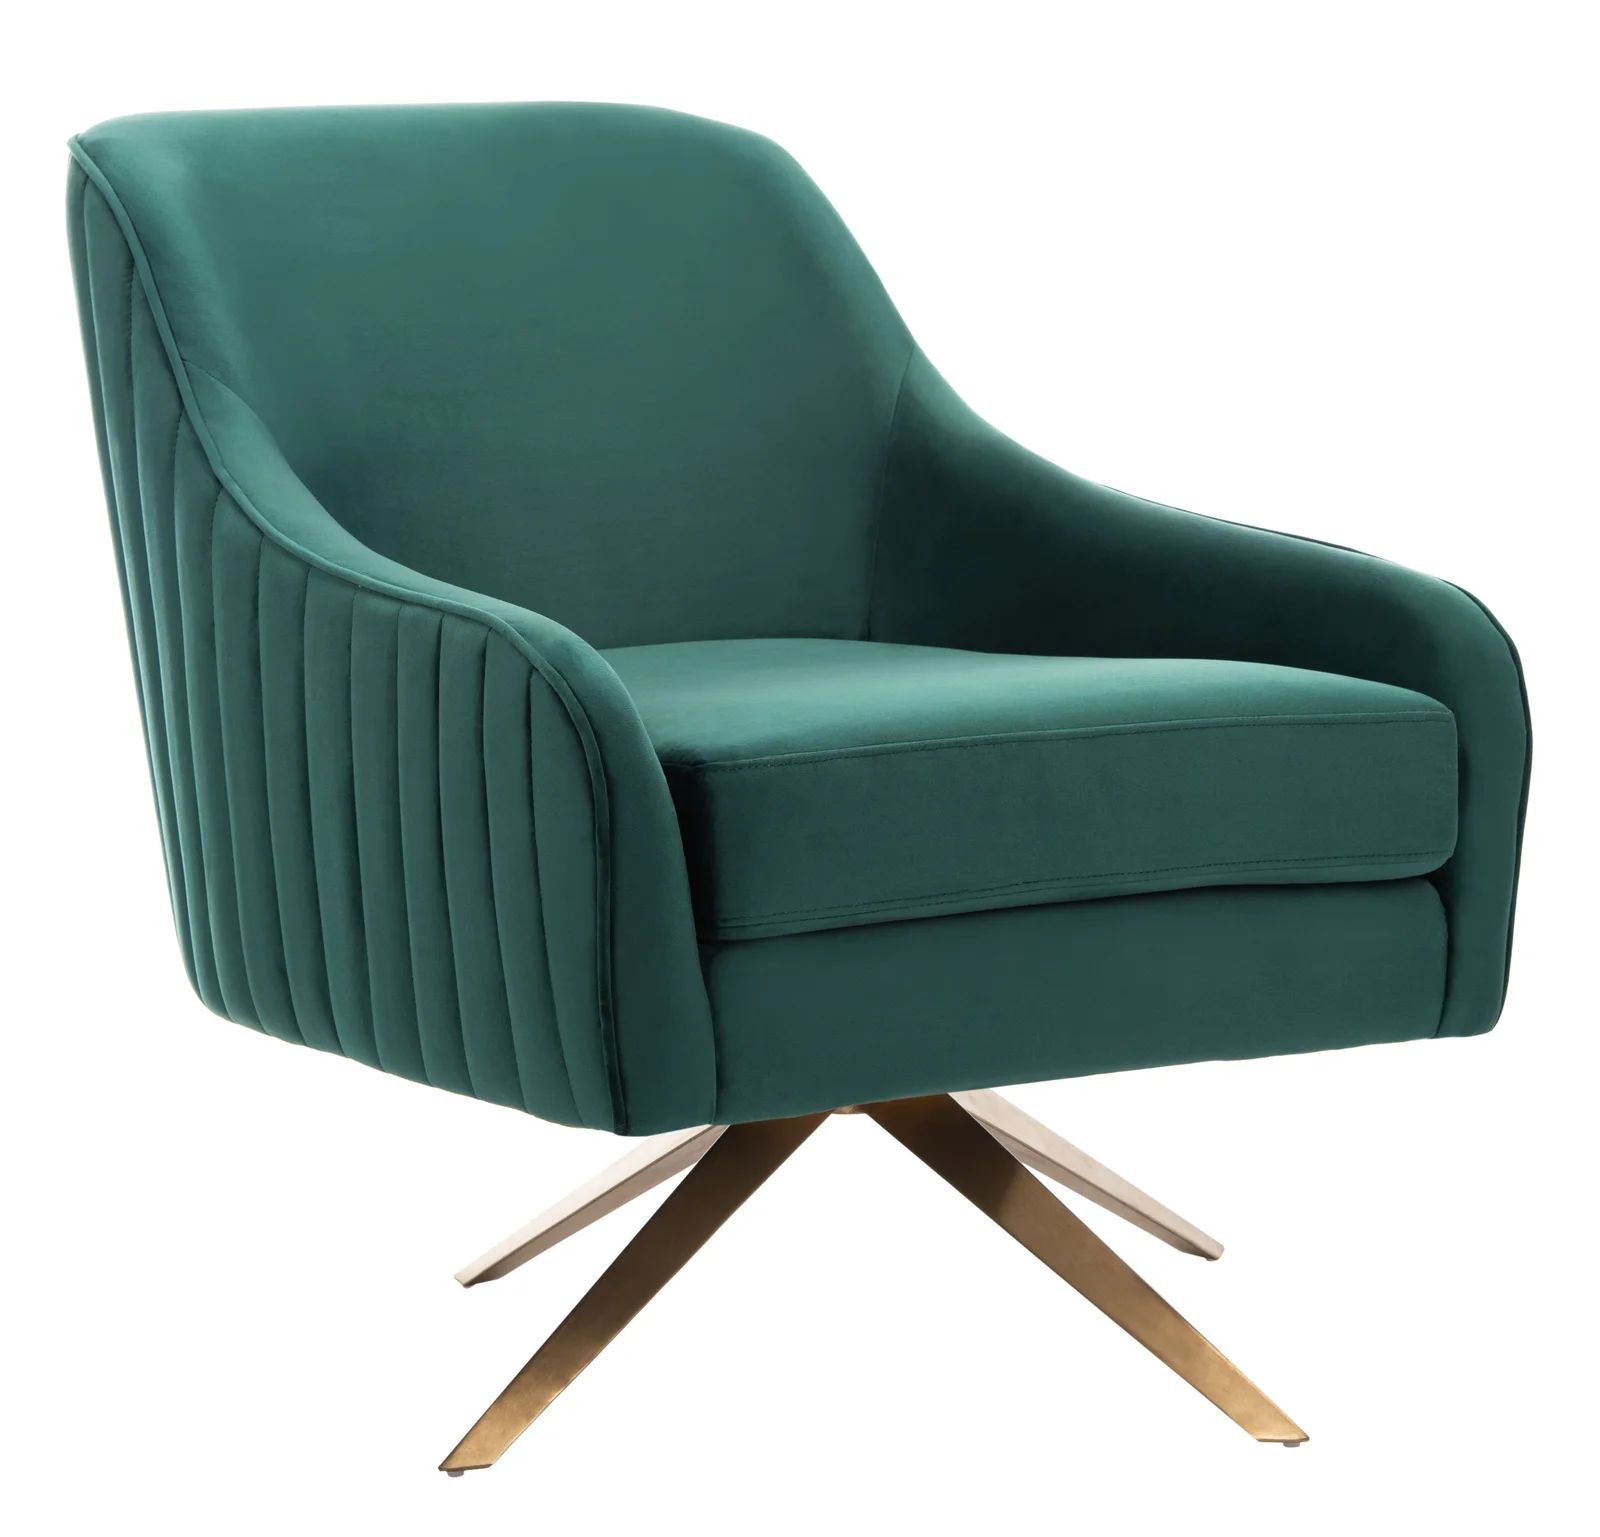 Skye Upholstered Swivel Armchair | Wayfair Professional